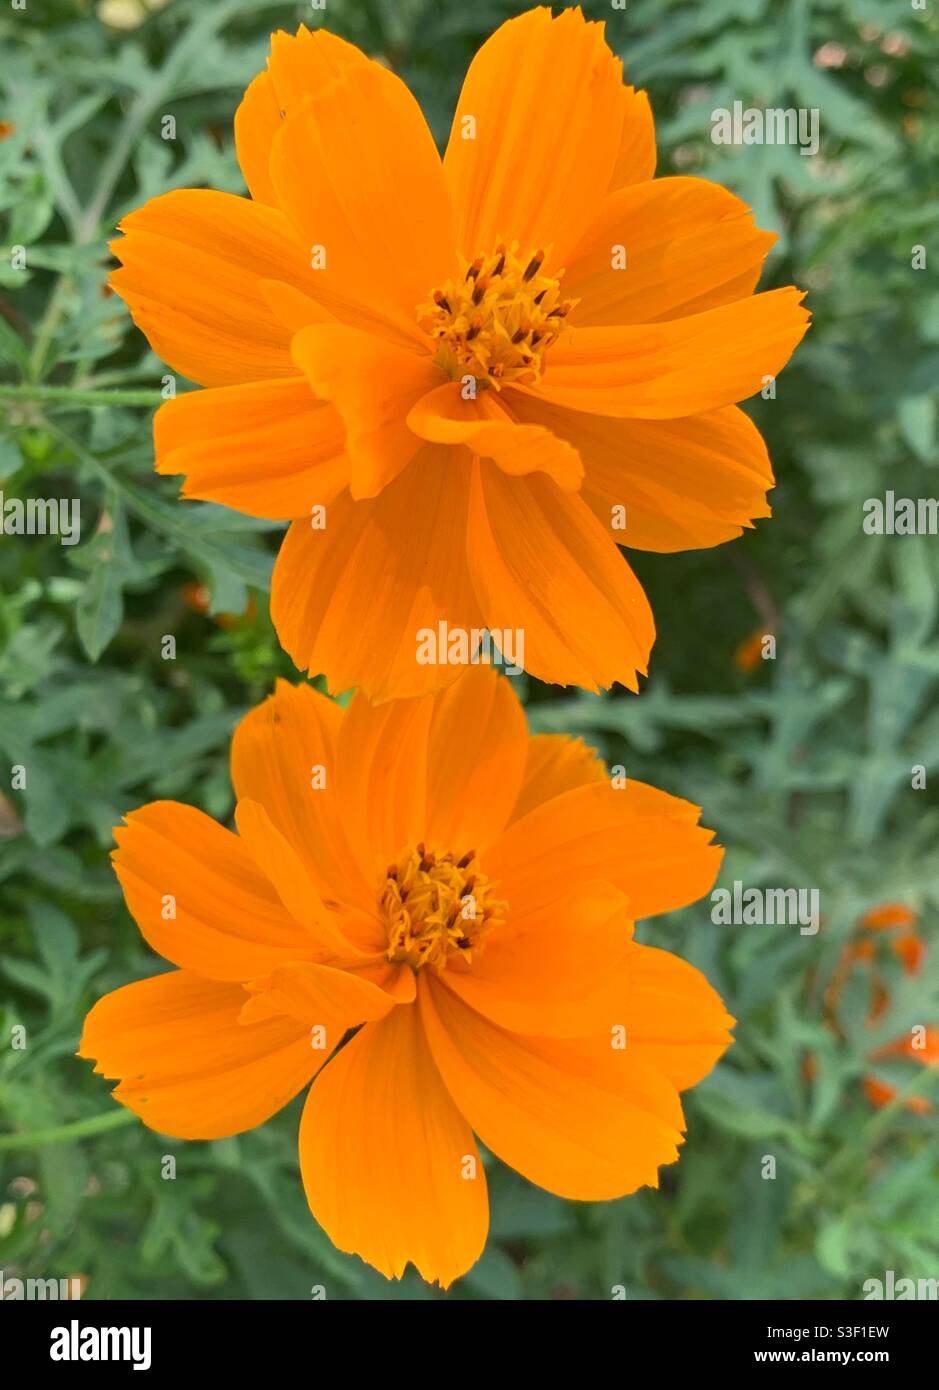 Fleurs orange cosmos avec feuilles vertes Photo Stock - Alamy